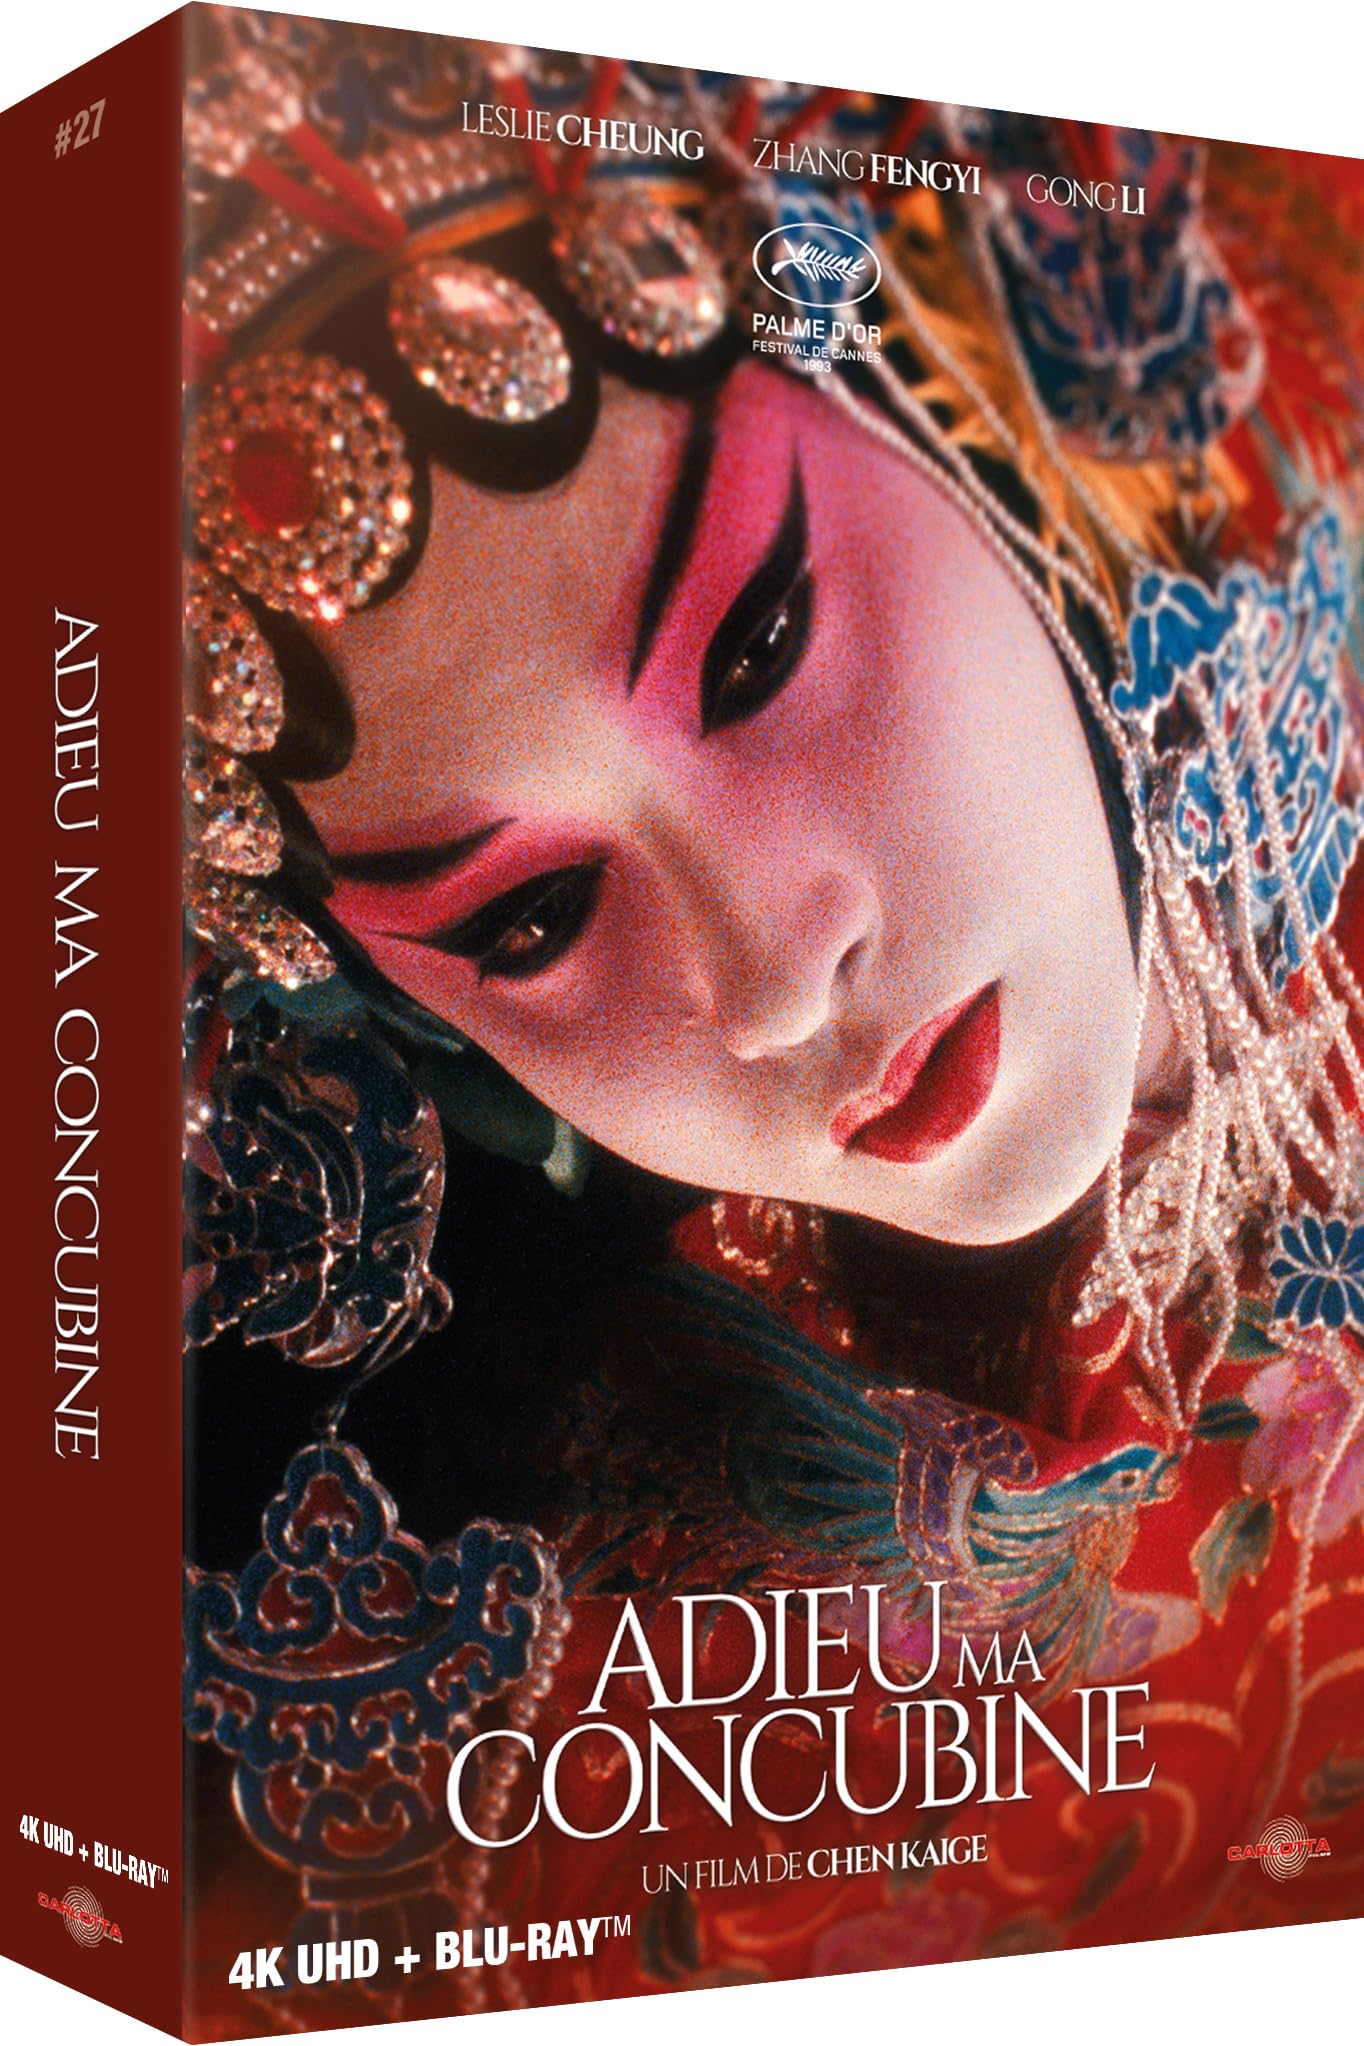 Achat Adieu, ma Concubine [Édition Prestige limitée-4K Ultra HD + Blu-Ray + Goodies] lVeLVm3xg Vente chaude